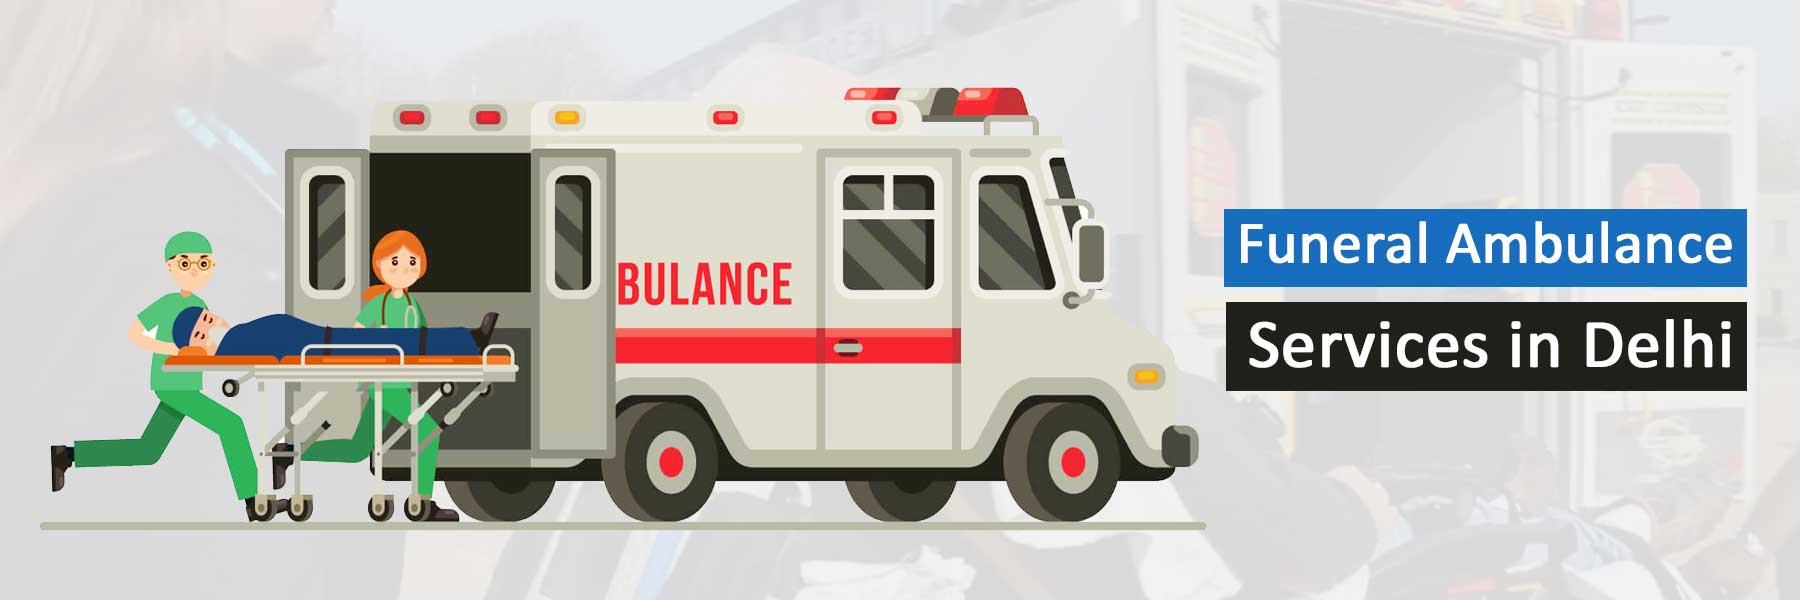 Funeral Ambulance Services in Delhi